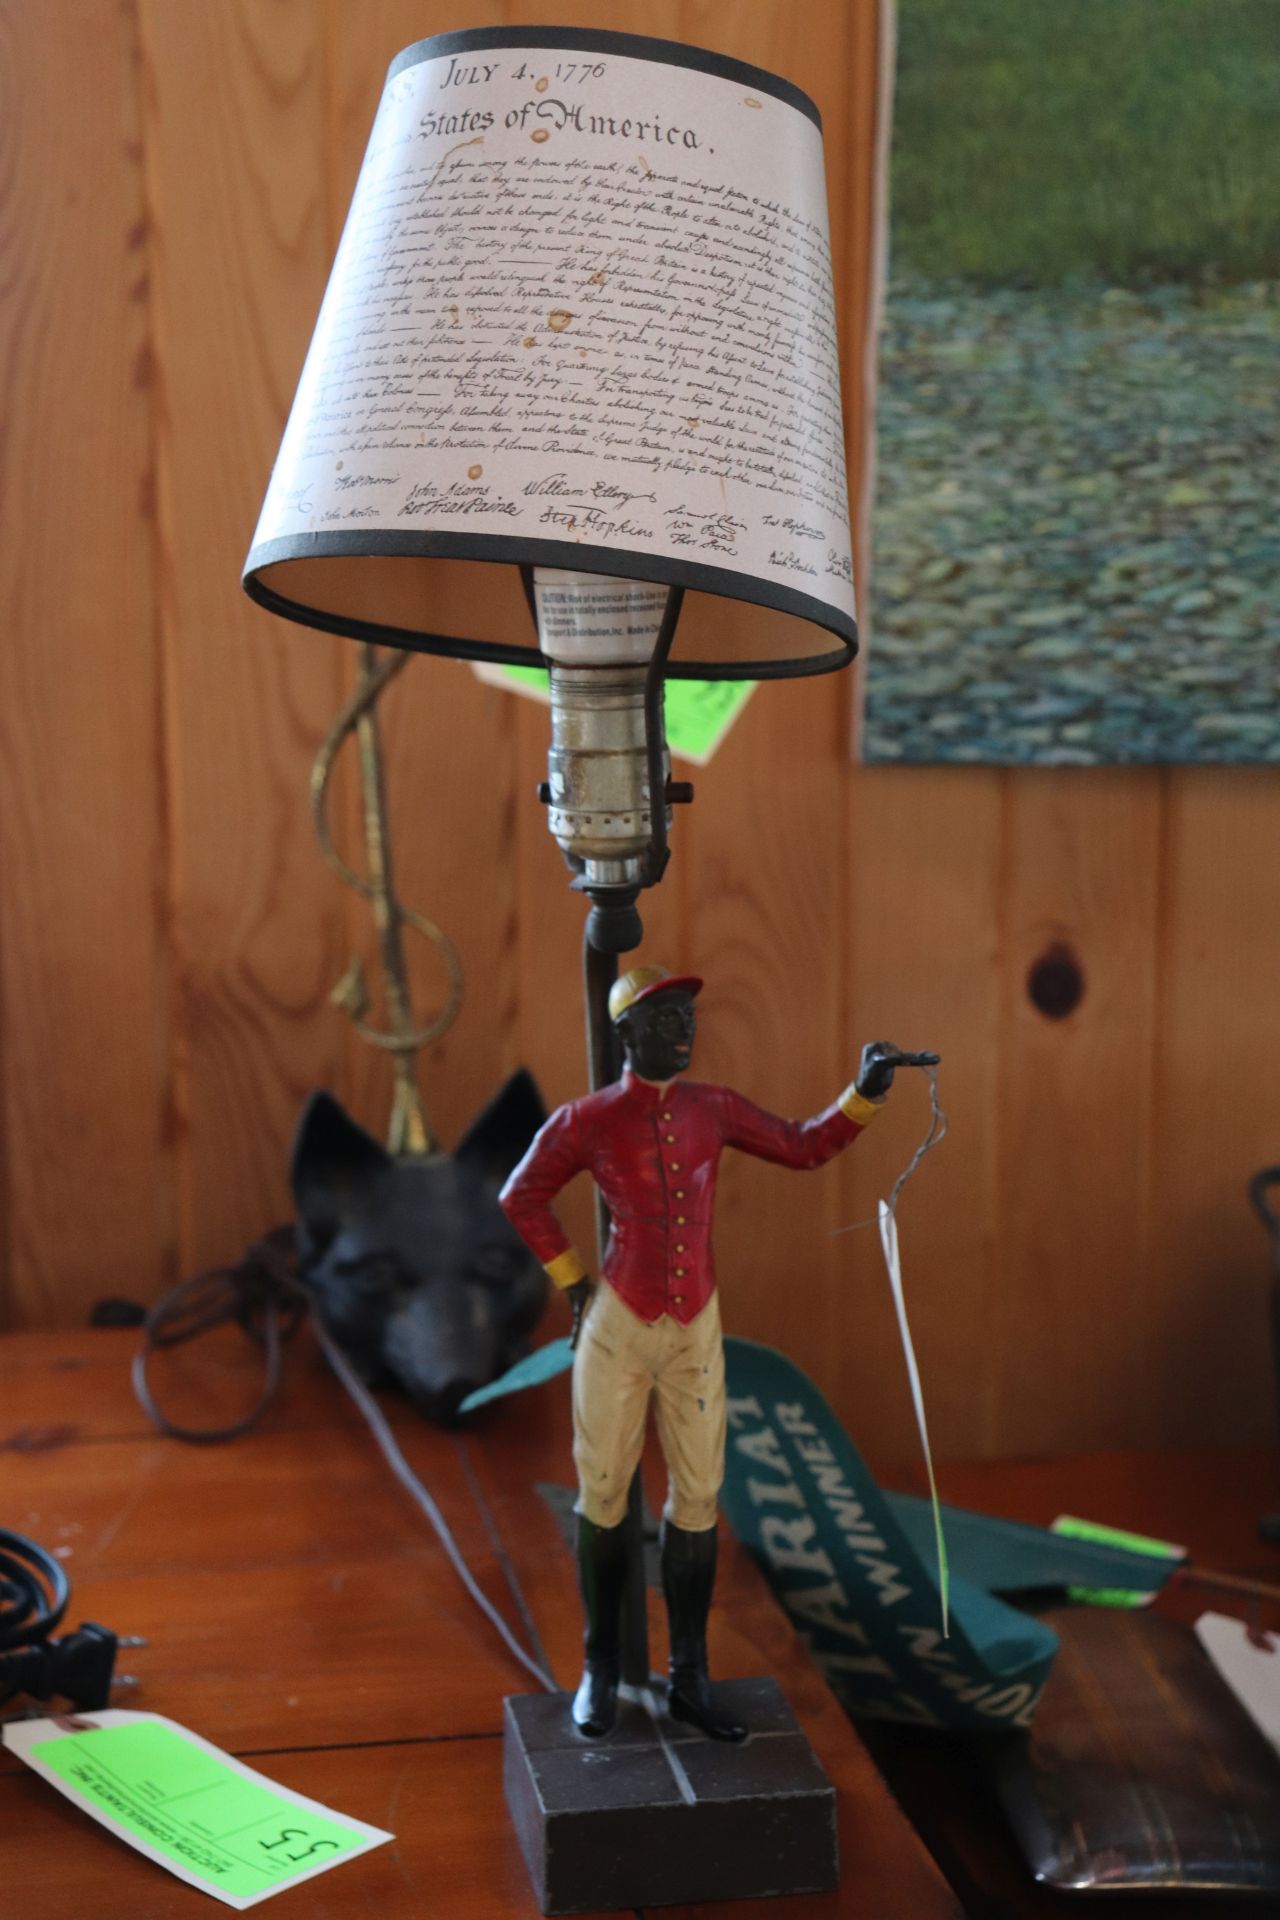 Jocky lamp